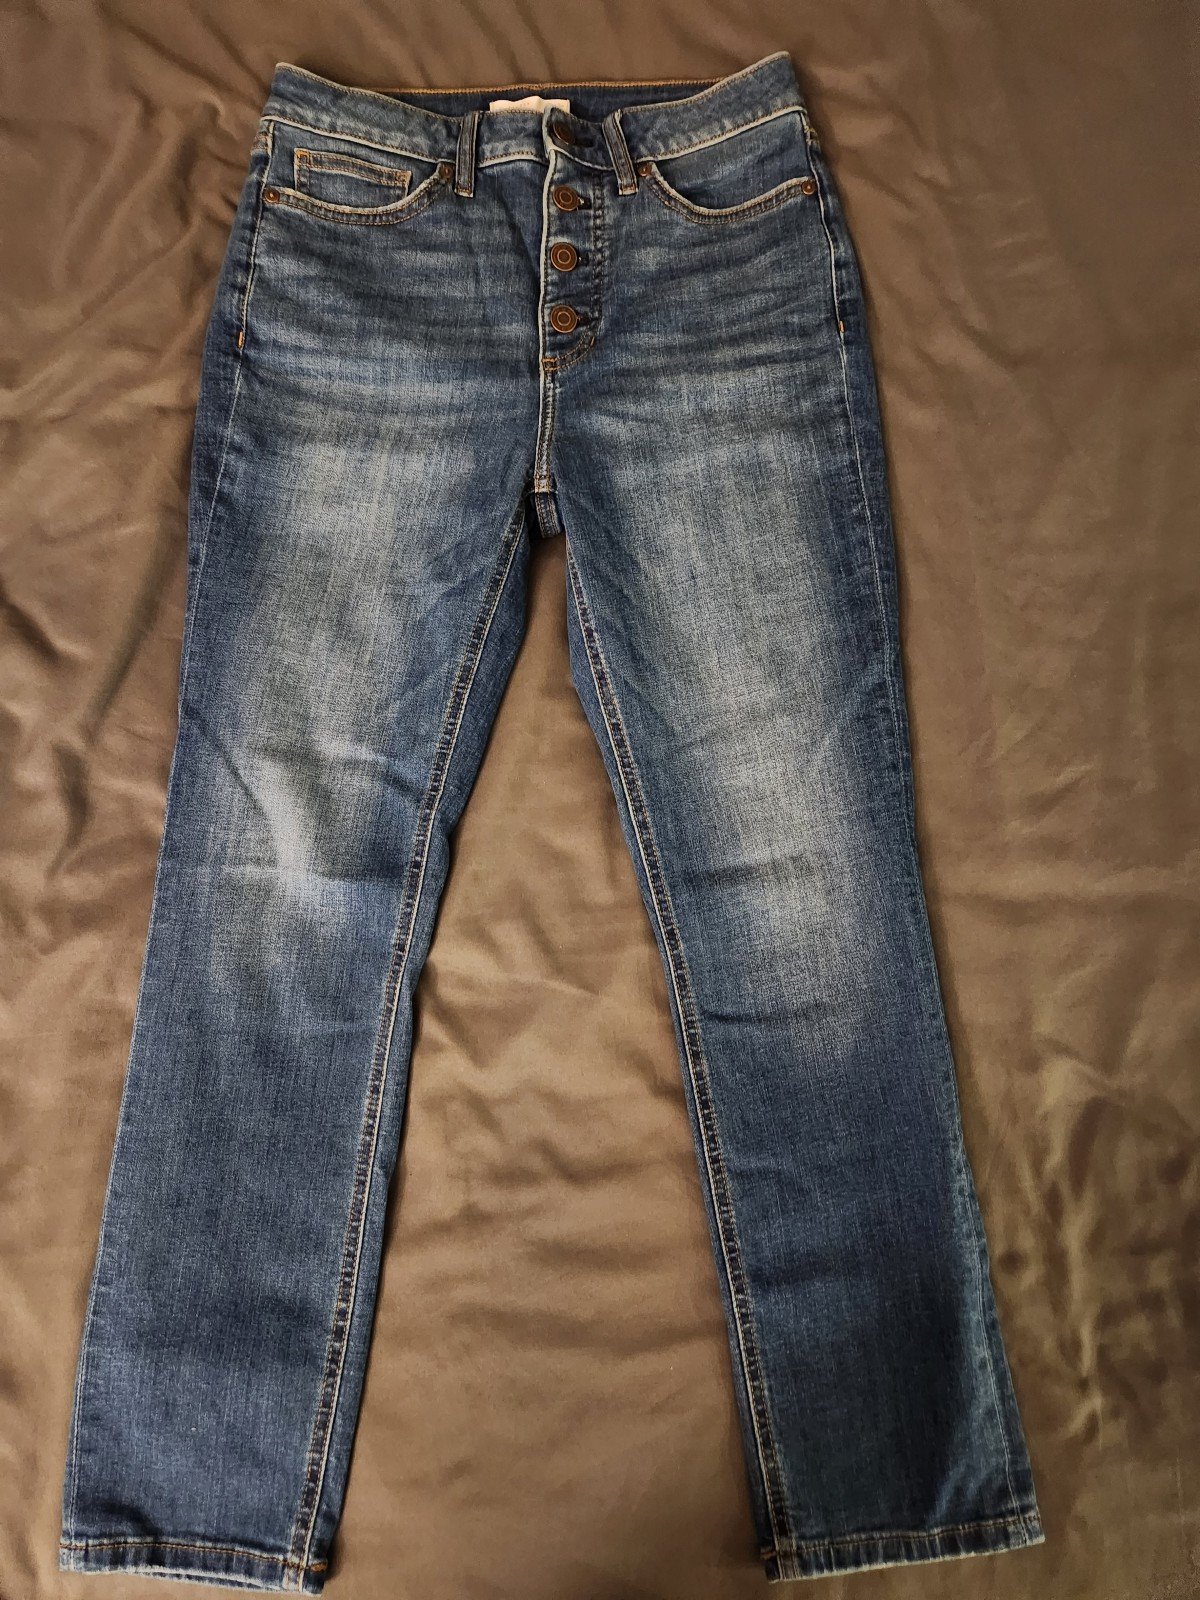 Perfect Jeans MRHIl1ieJ High Quaity